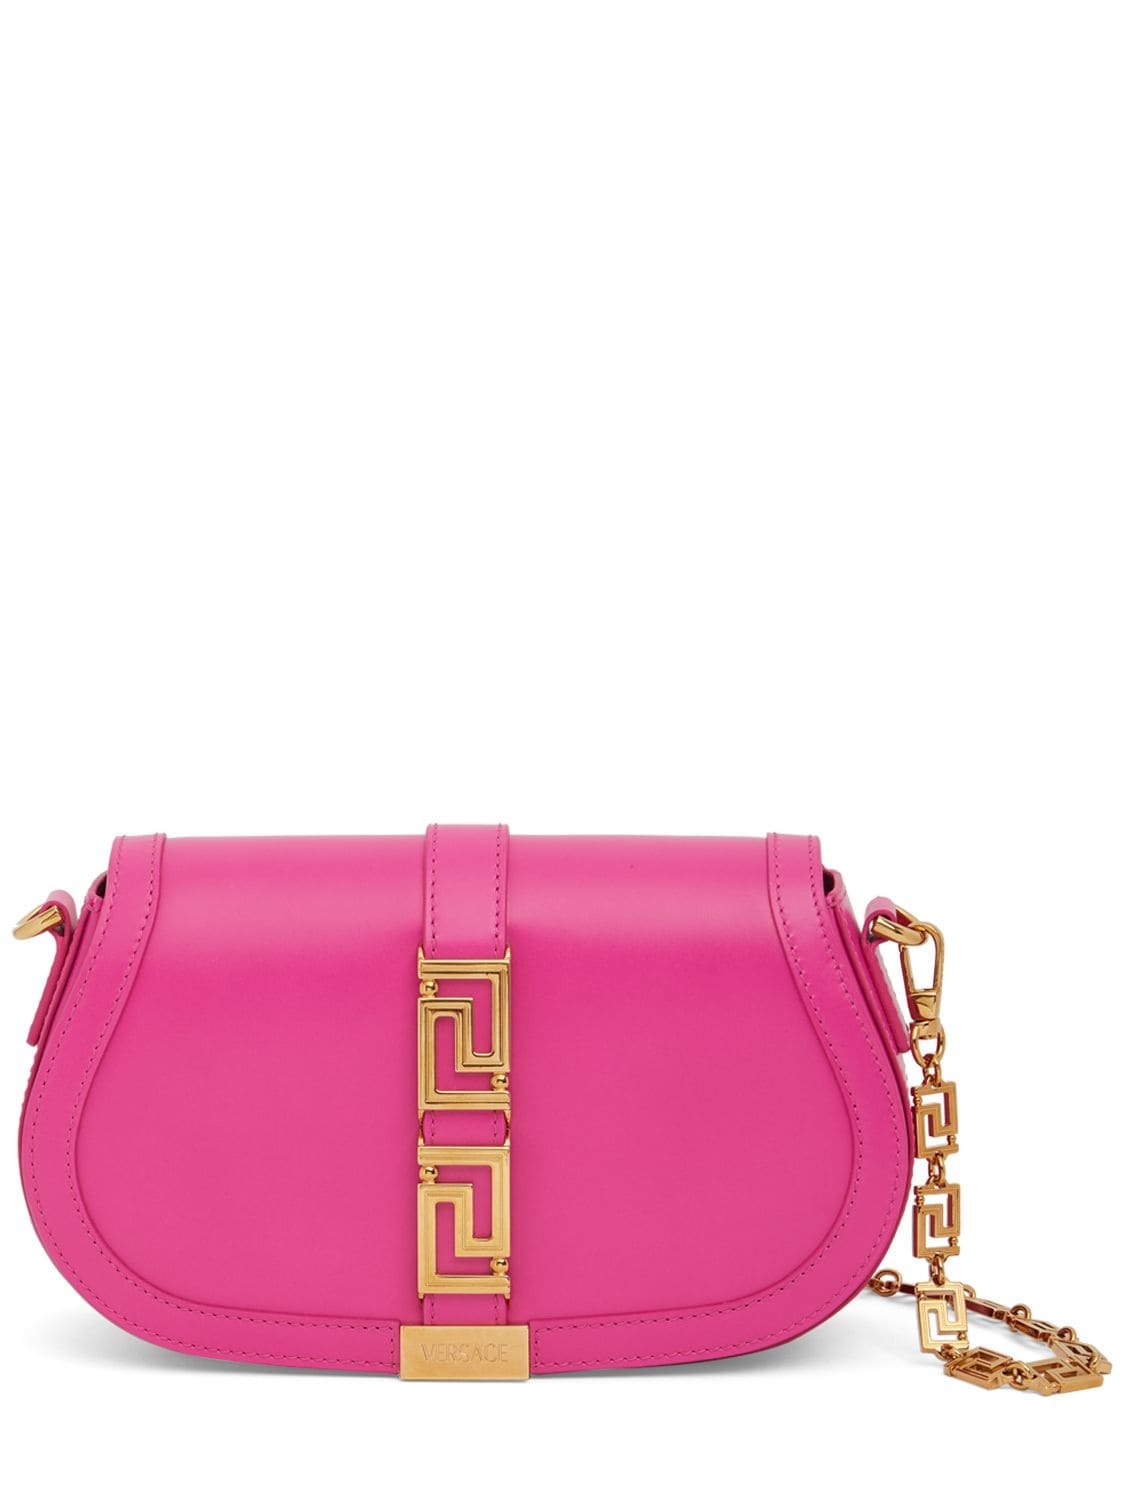 VERSACE Small Greca Goddess Leather Shoulder Bag in pink